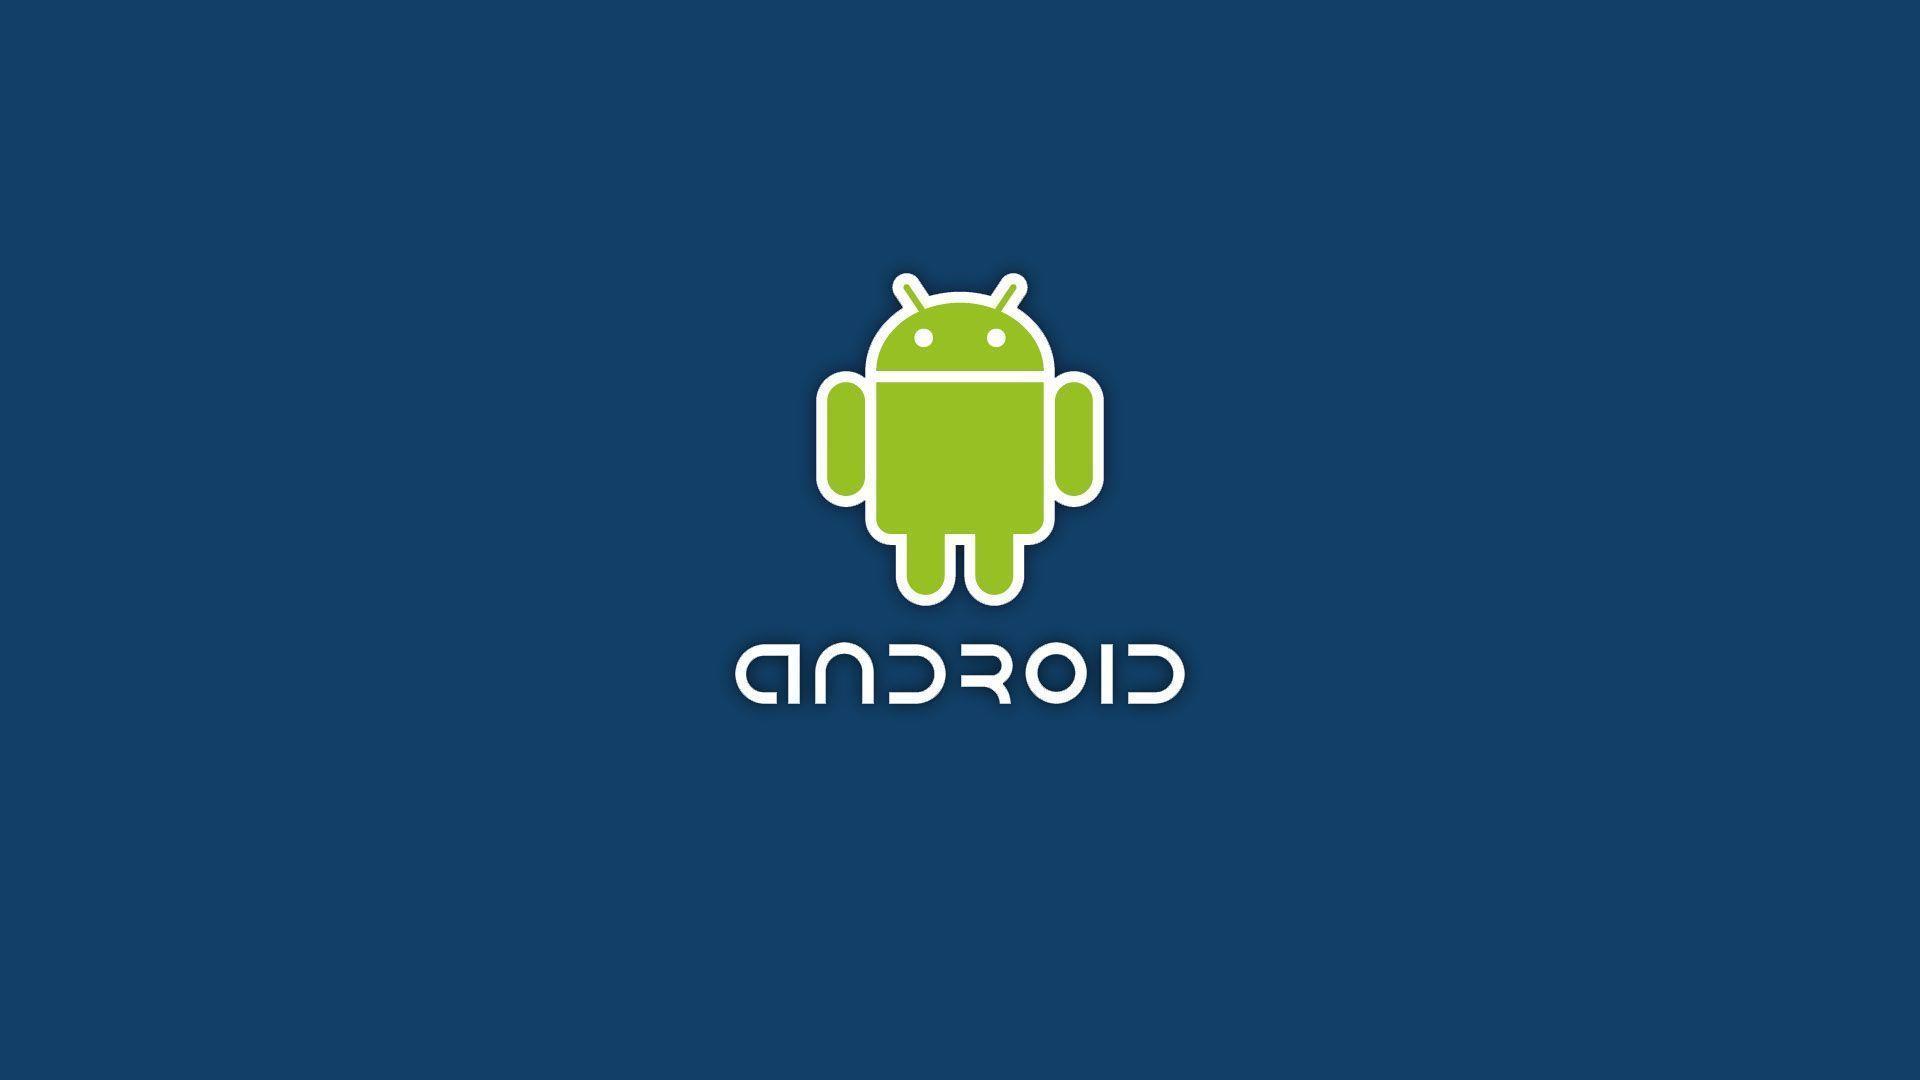 Wallpaper For > Android Logo Wallpaper For Mobile